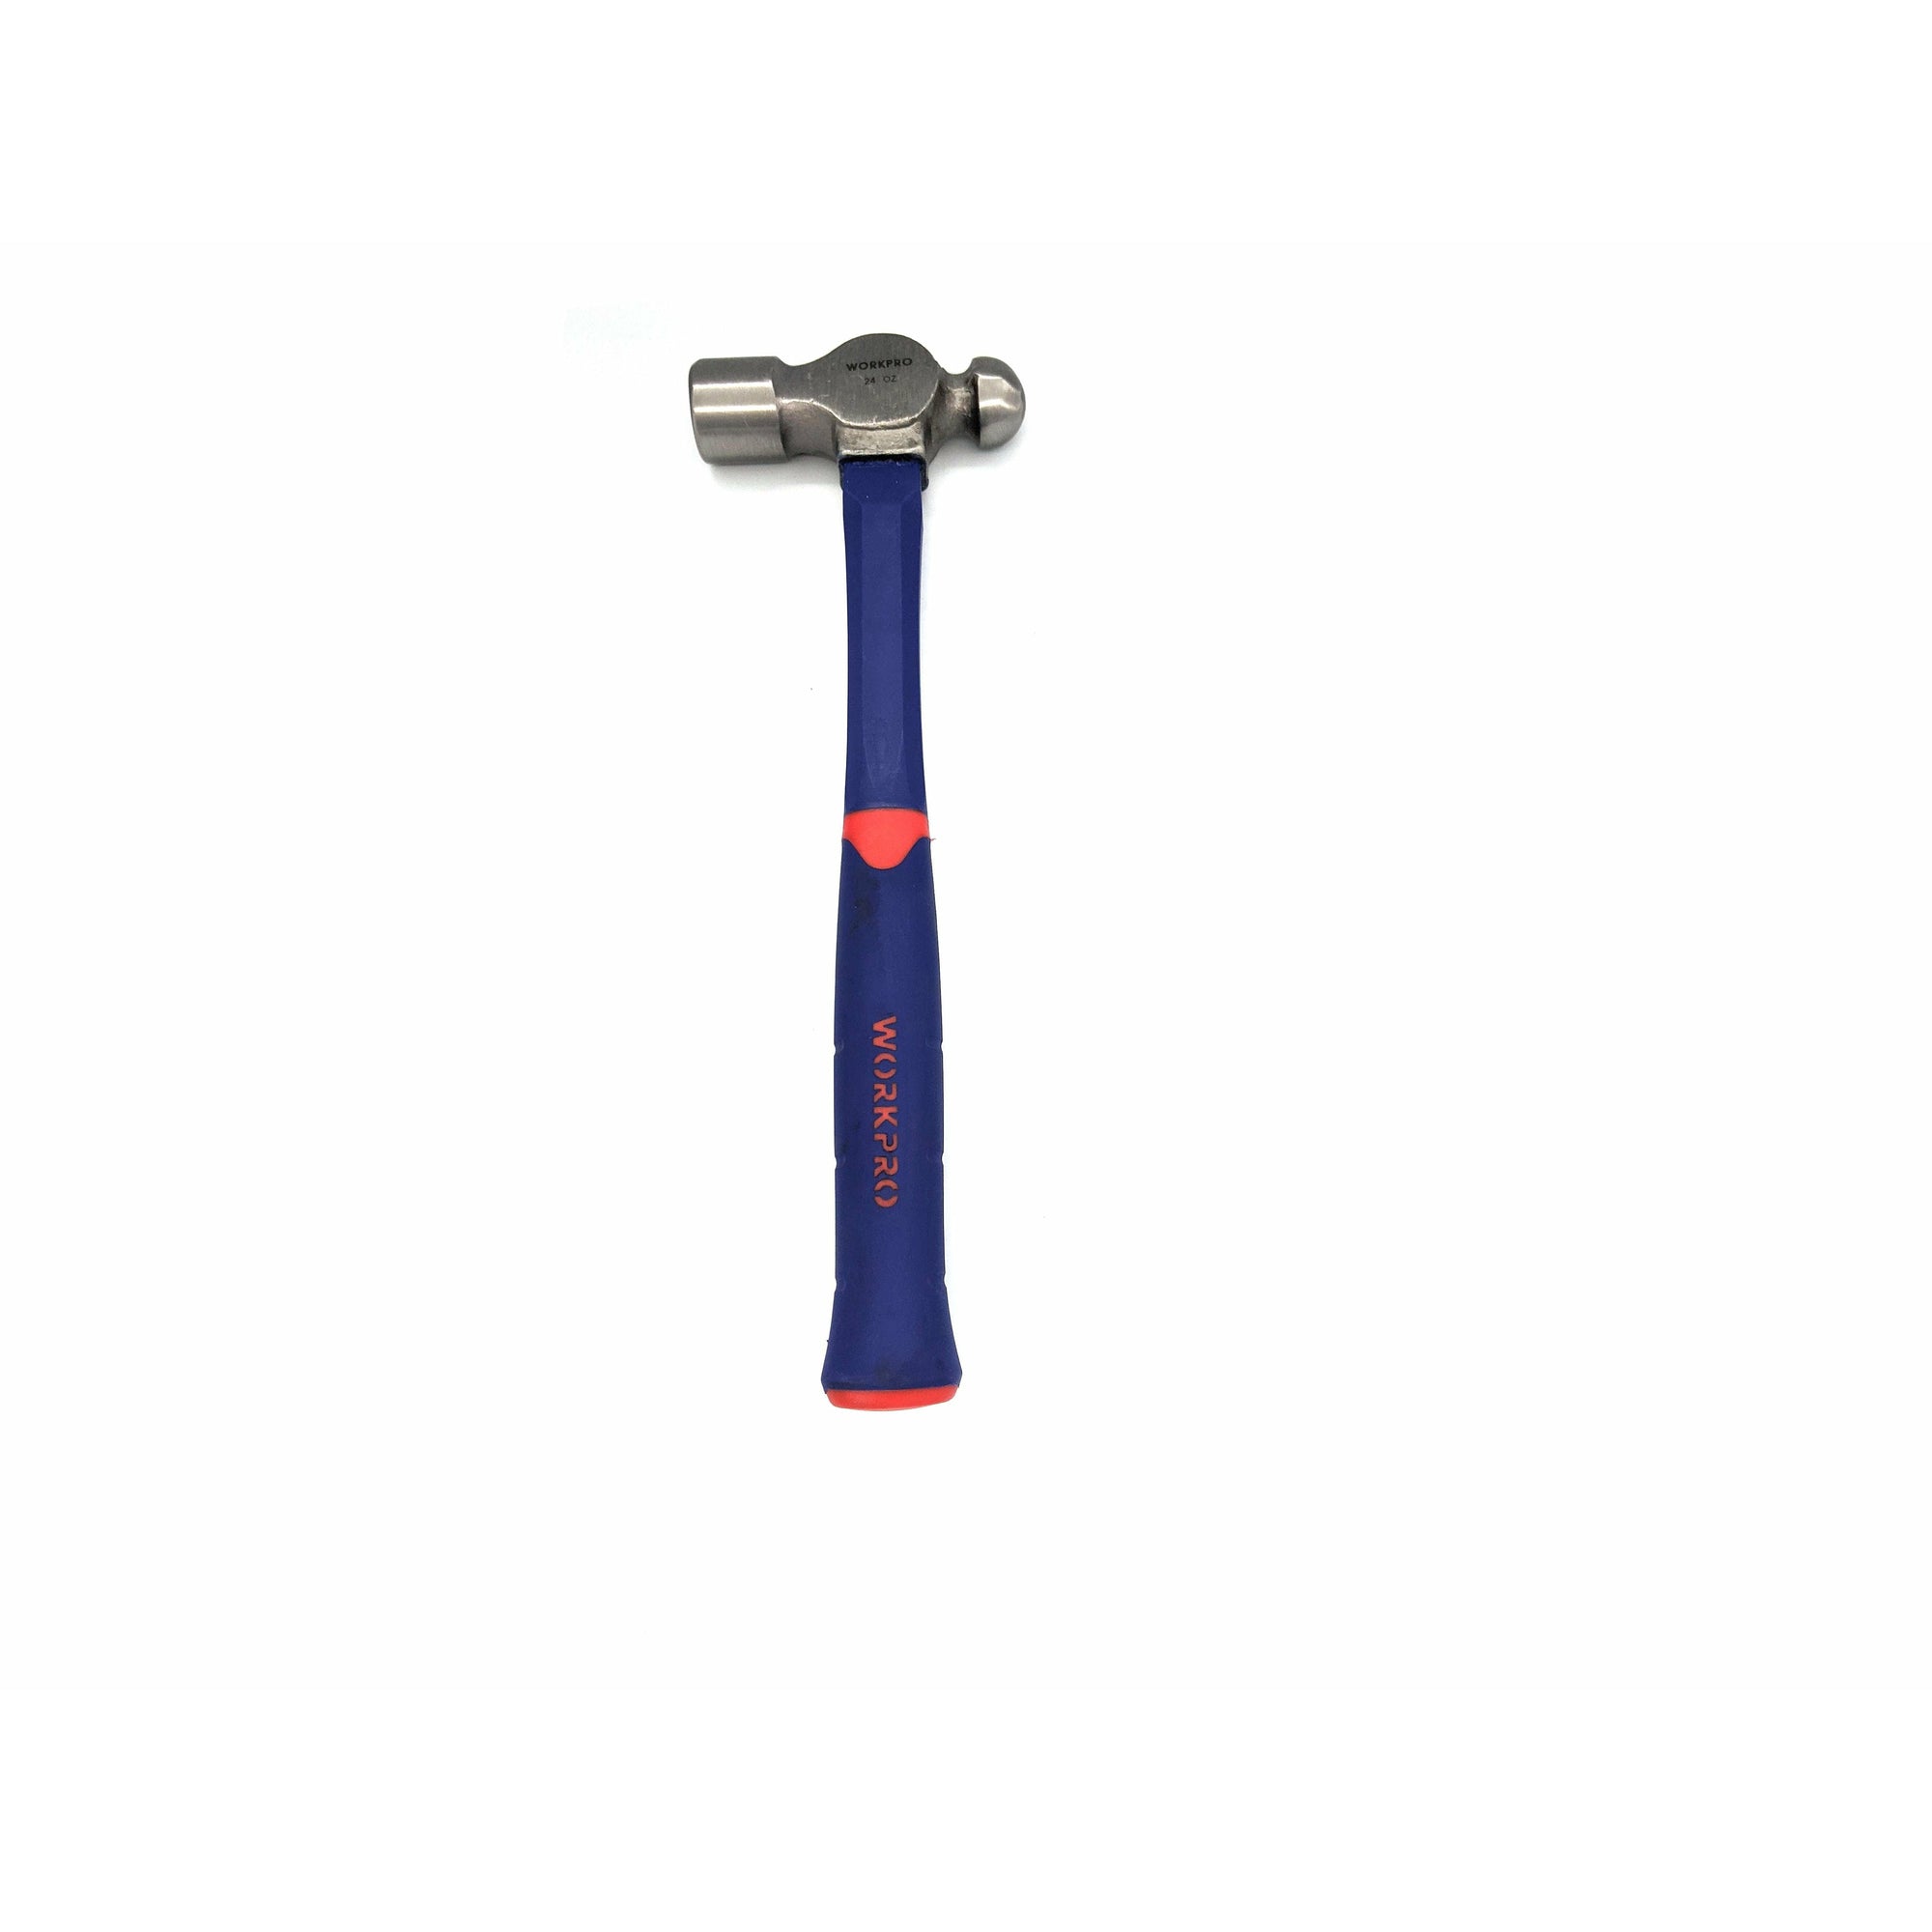 Workpro Ball-Pein Hammer With Fiberglass Handle 24Oz